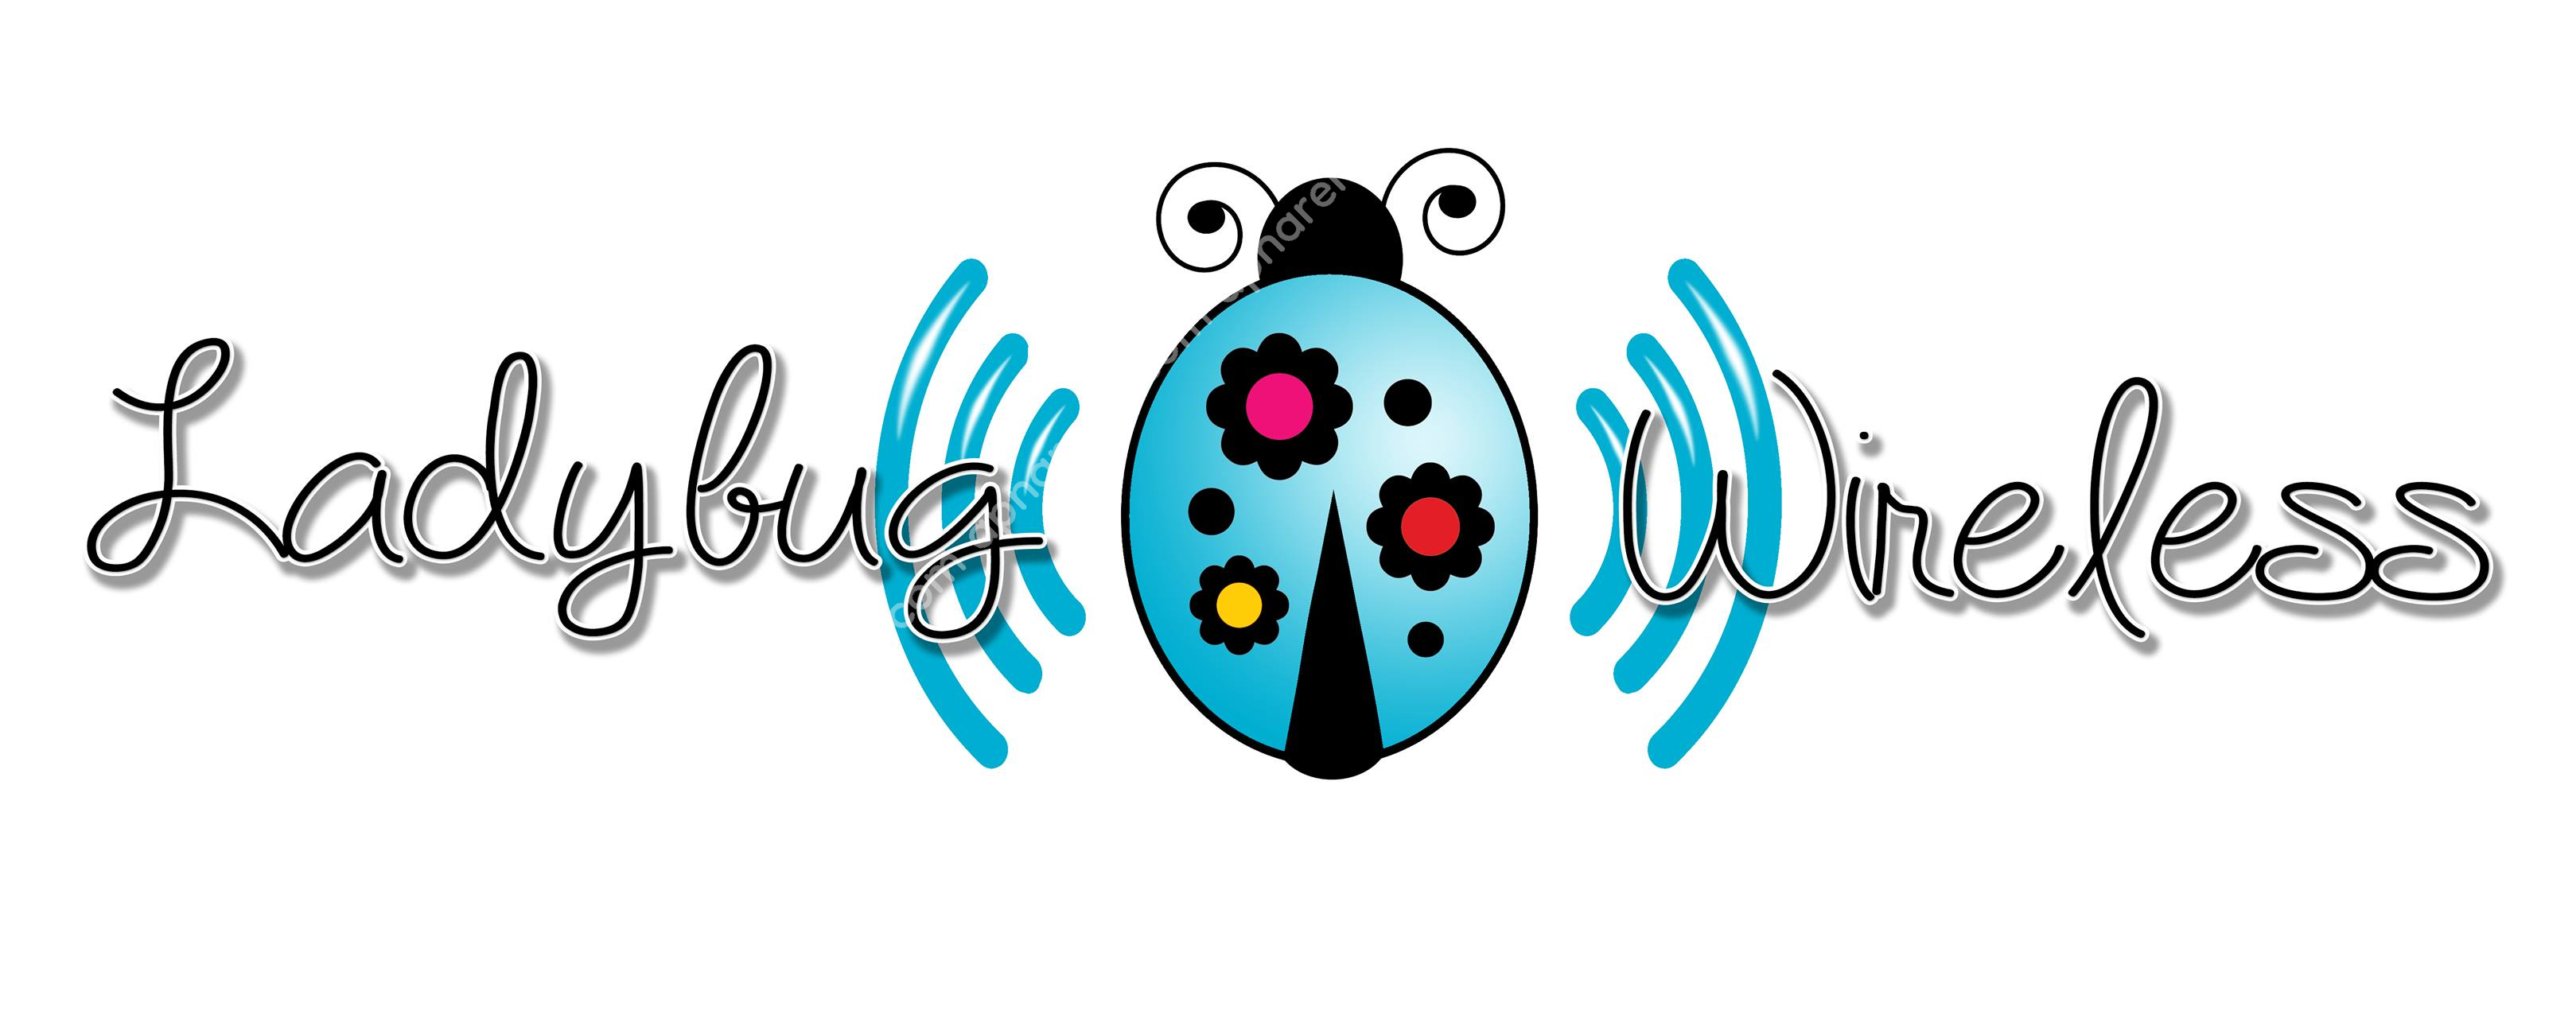 Ladybug Wireless APN Internet Settings Android iPhone